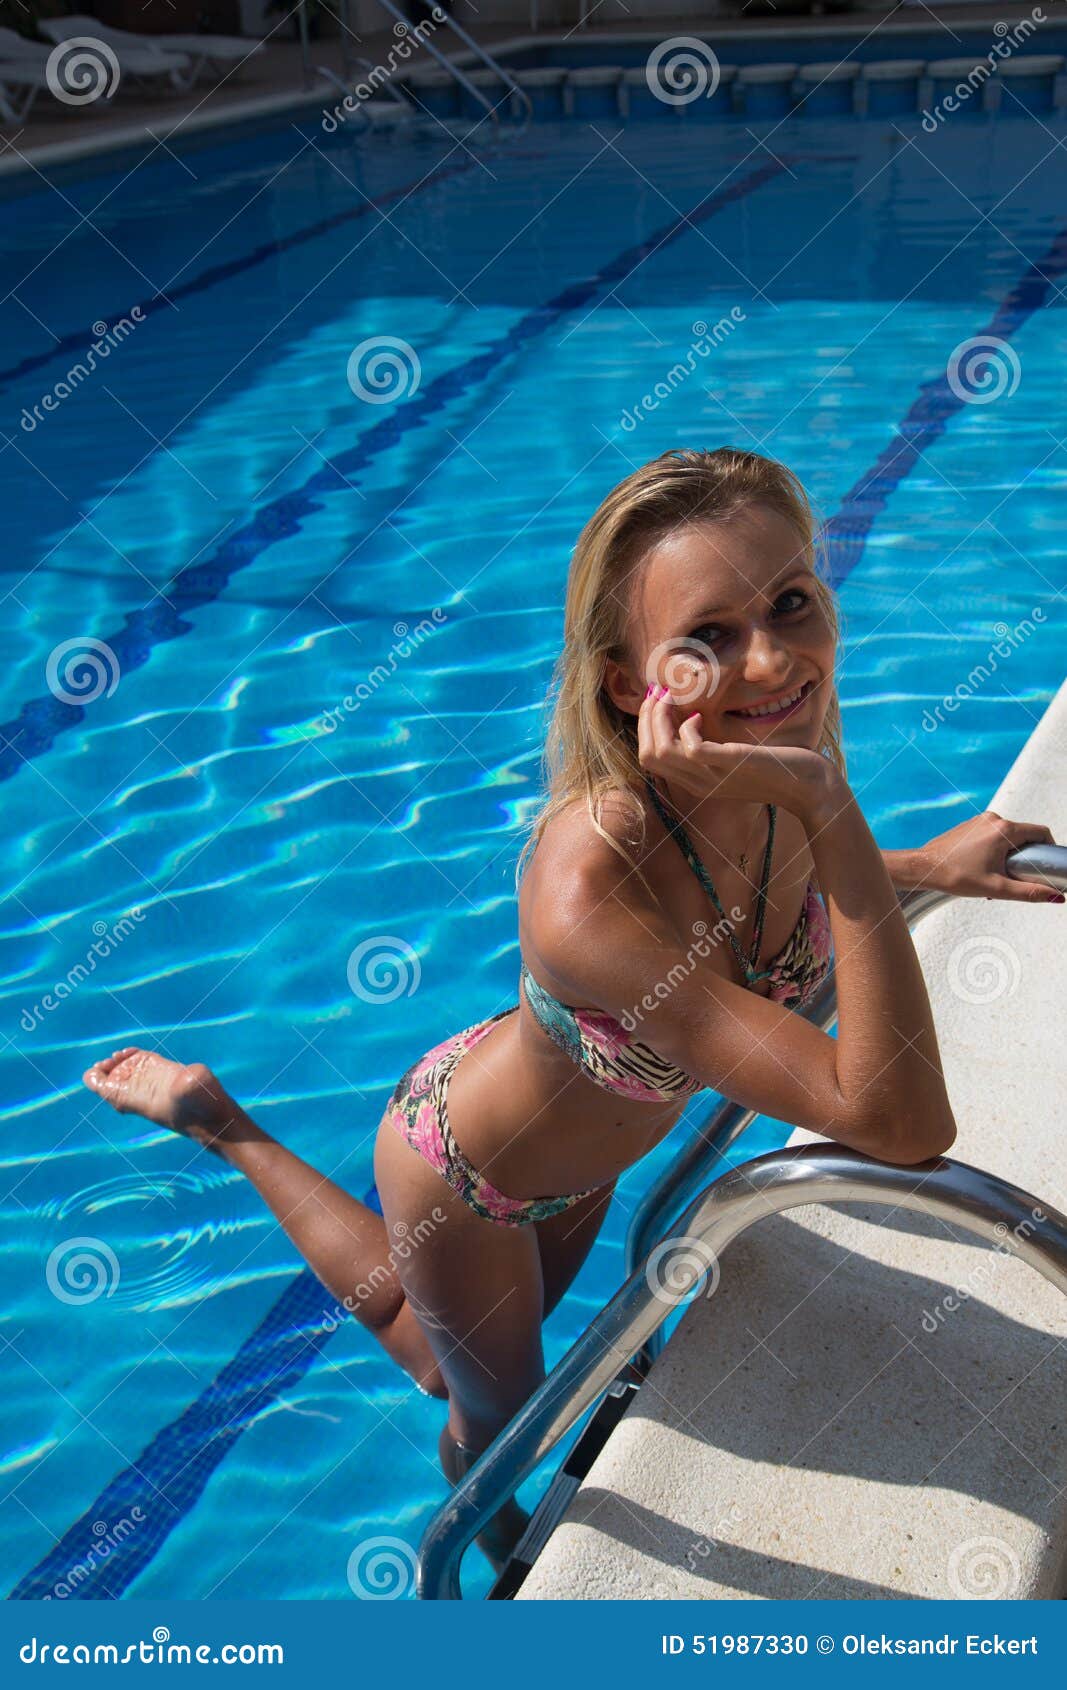 https://thumbs.dreamstime.com/z/sexy-girl-bikini-swimming-pool-51987330.jpg